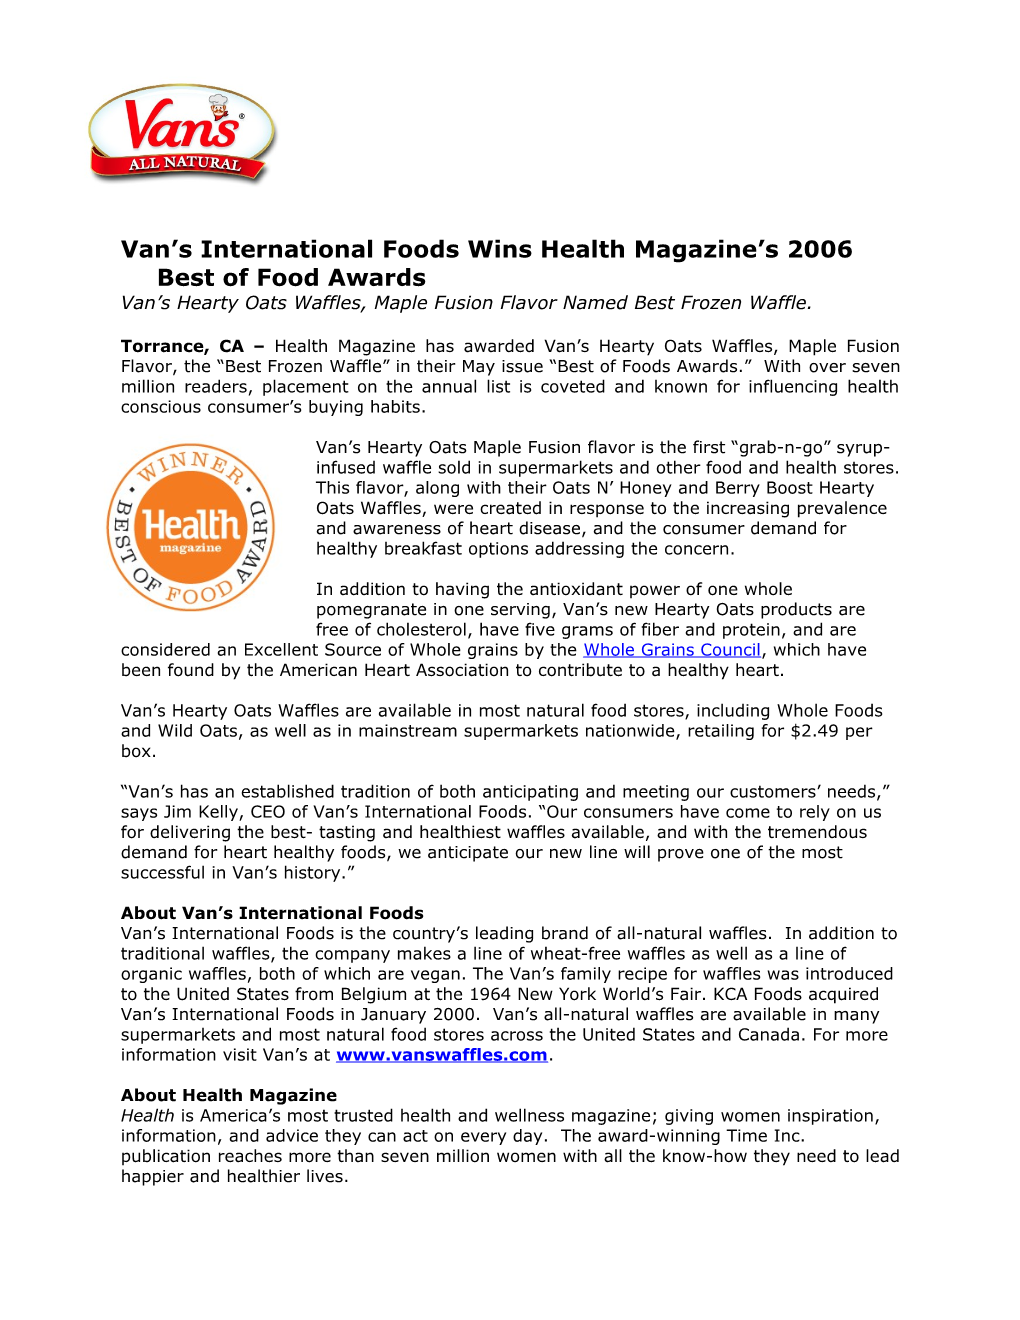 Van S International Foods Wins Health Magazine S 2006 Best of Food Awards